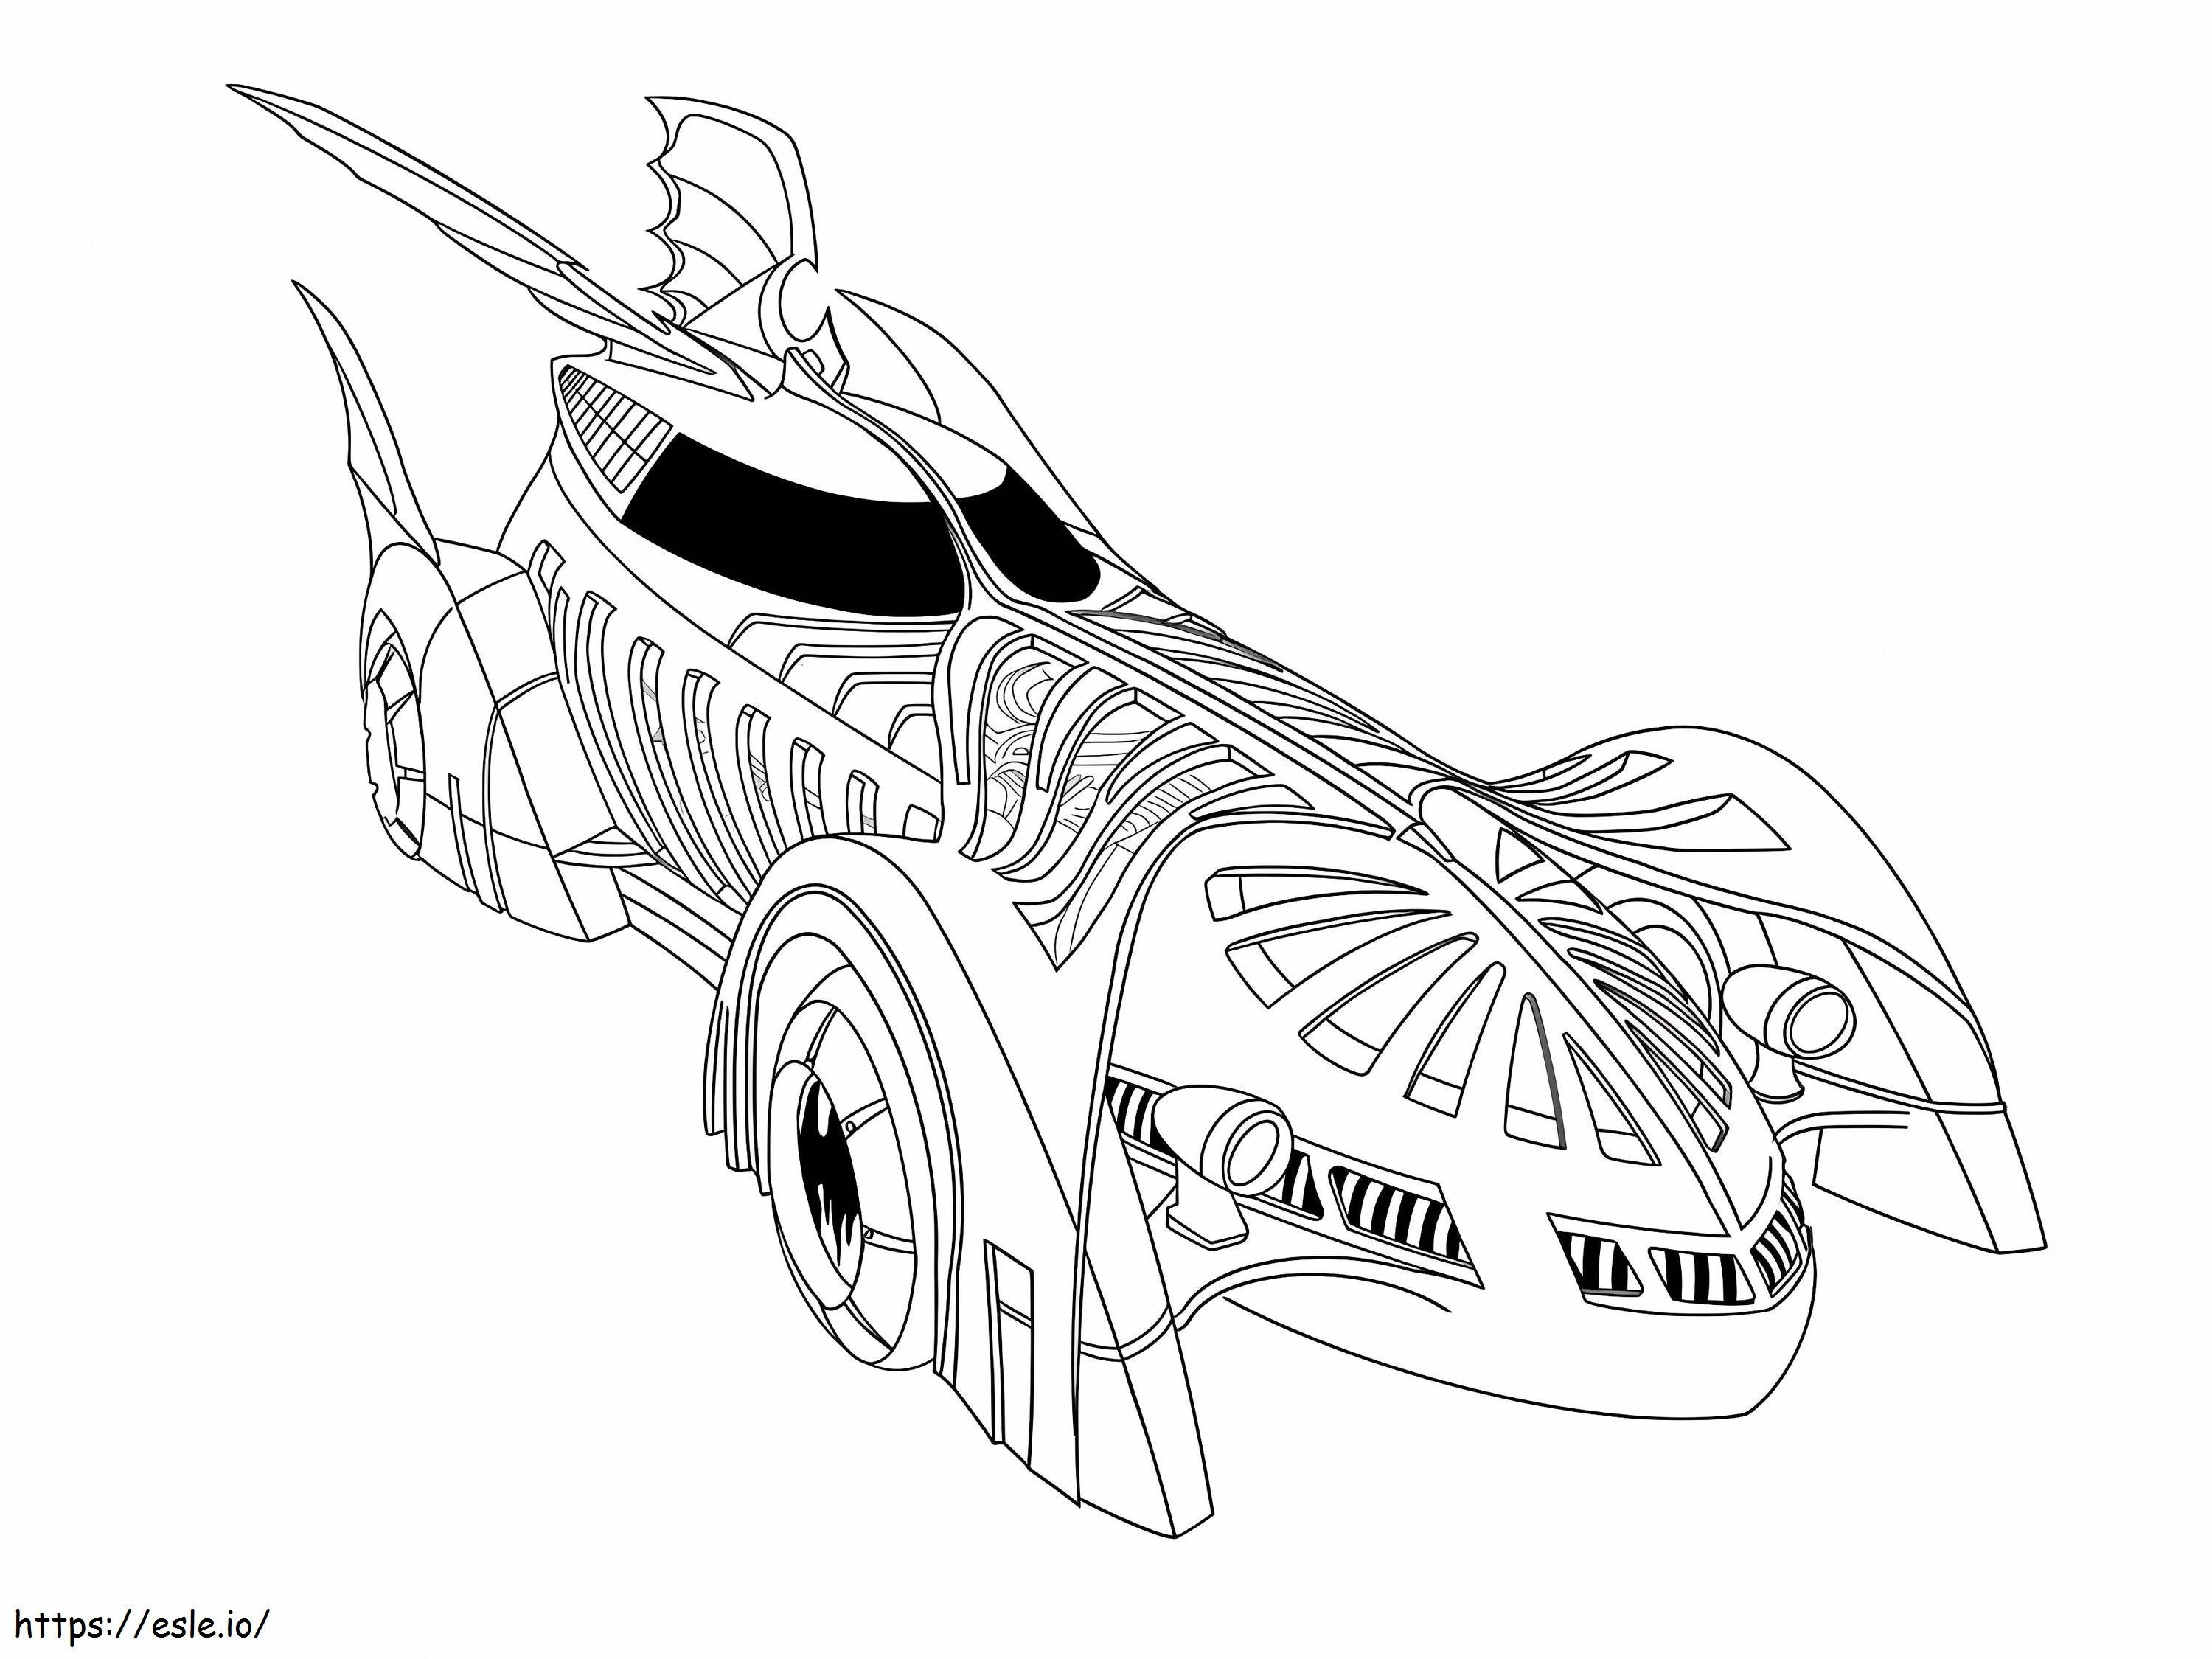 Batmobile 4 coloring page